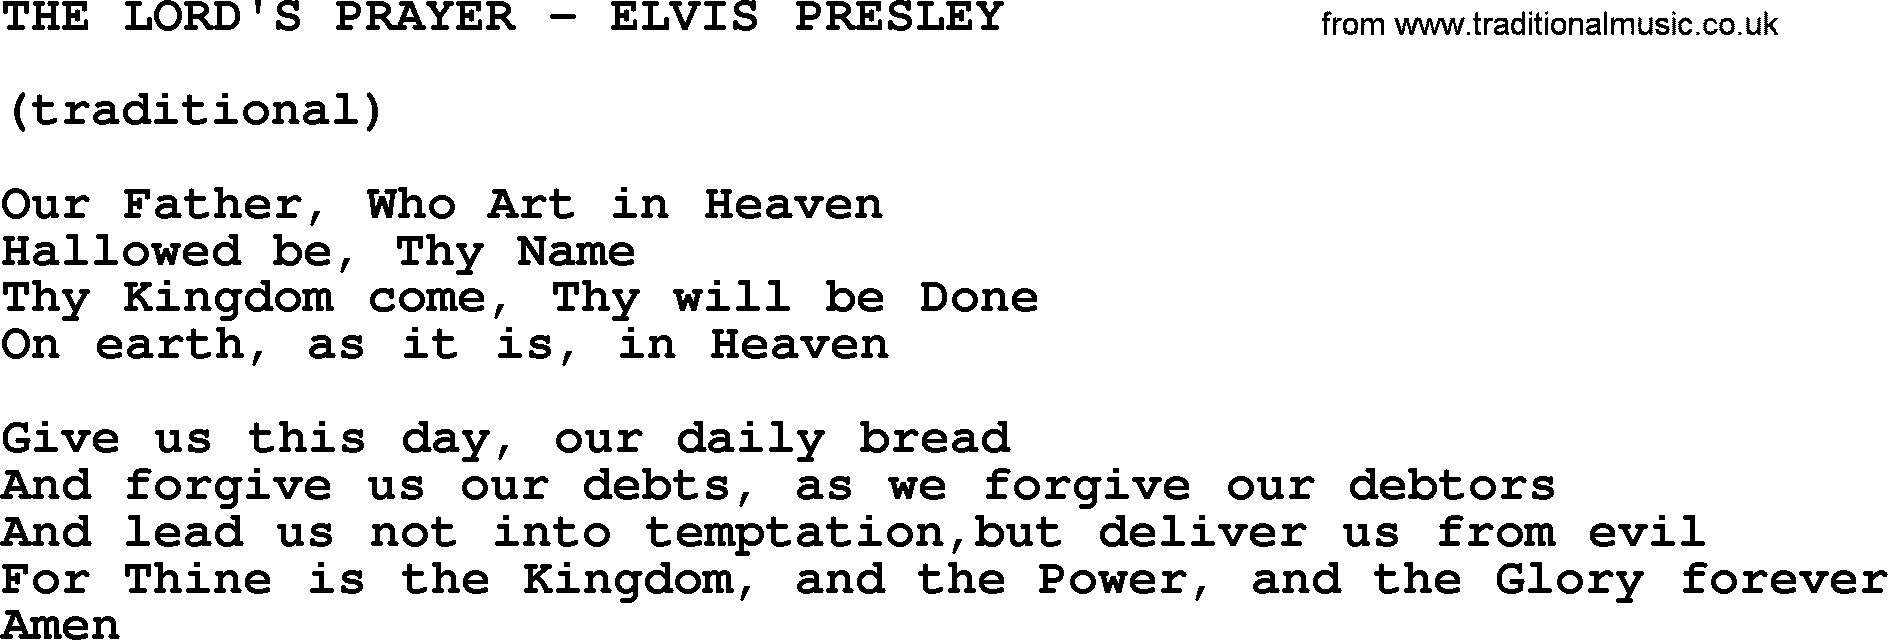 Elvis Presley song: The Lord's Prayer-Elvis Presley-.txt lyrics and chords